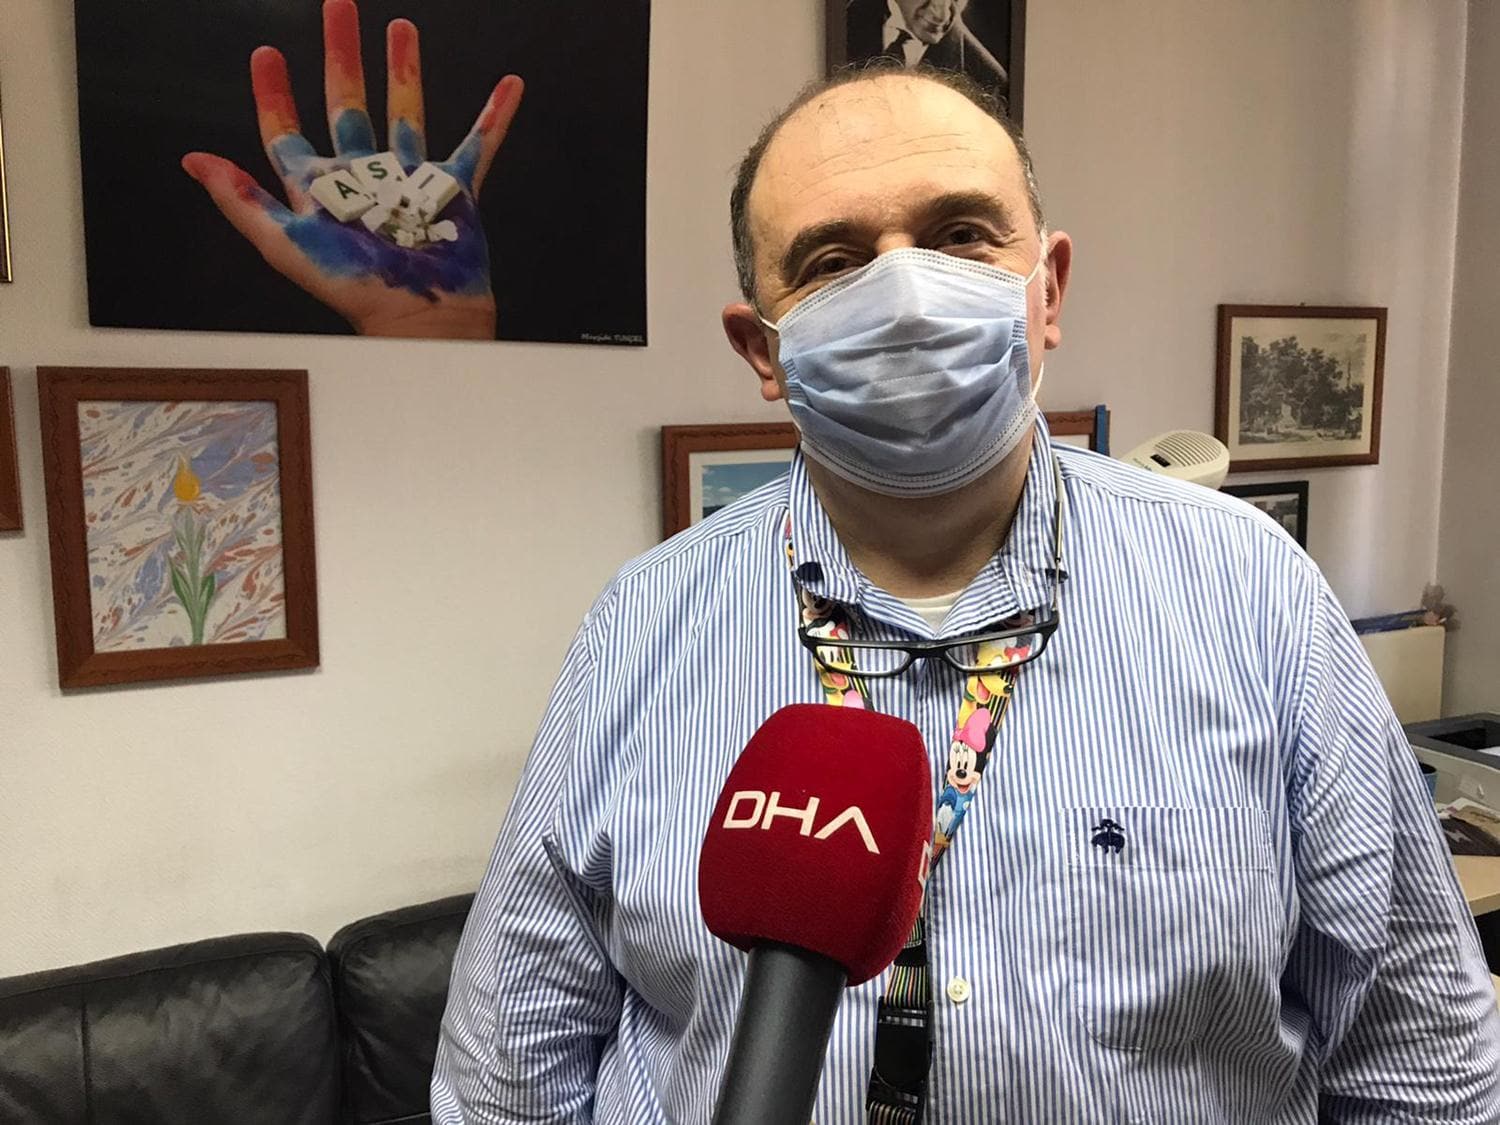 Koronavirs Bilim Kurulu yesi Prof. Dr. Ate Kara aklad: Dnyada grip asnda sknt olaca kesin